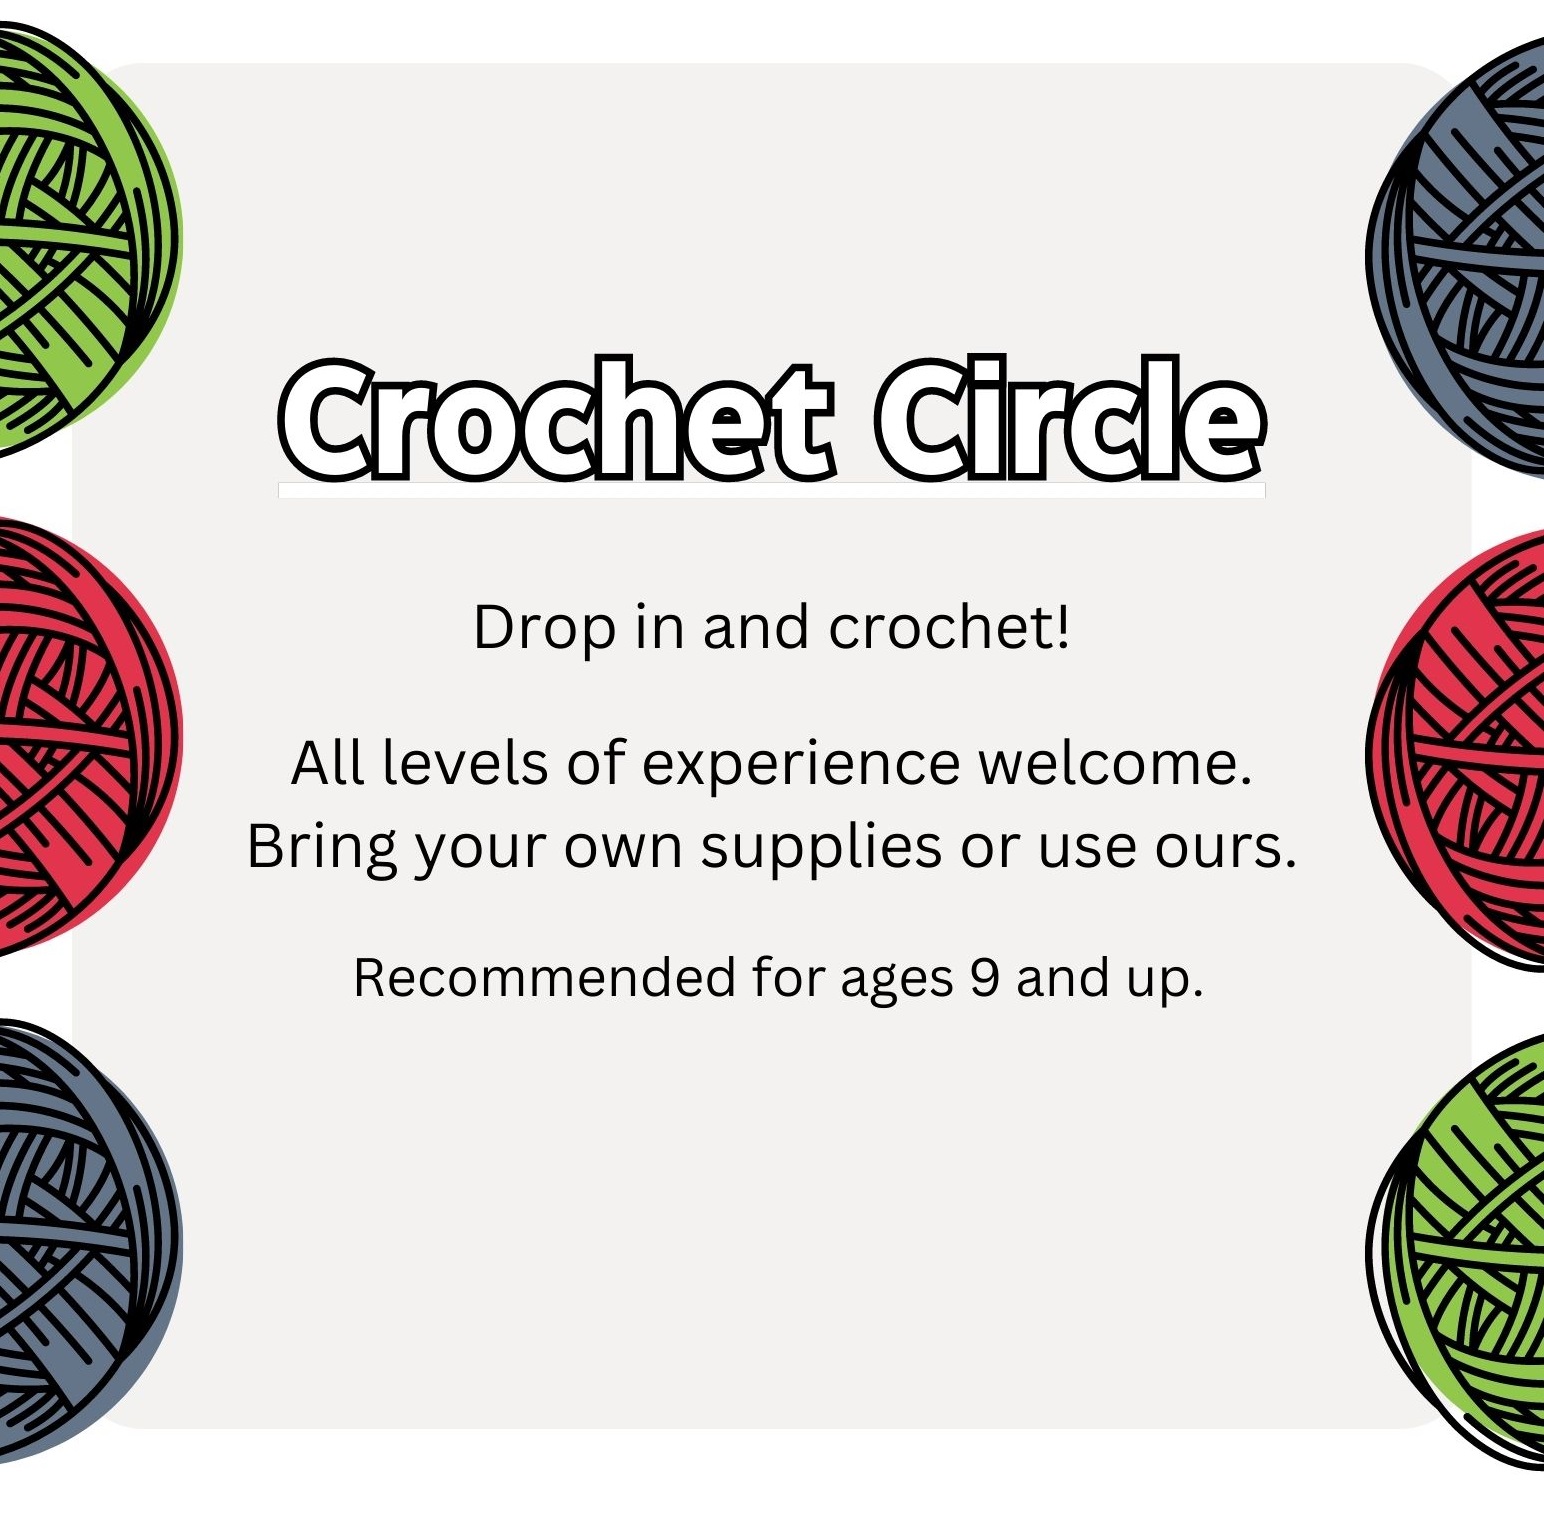 Crochet Circle info